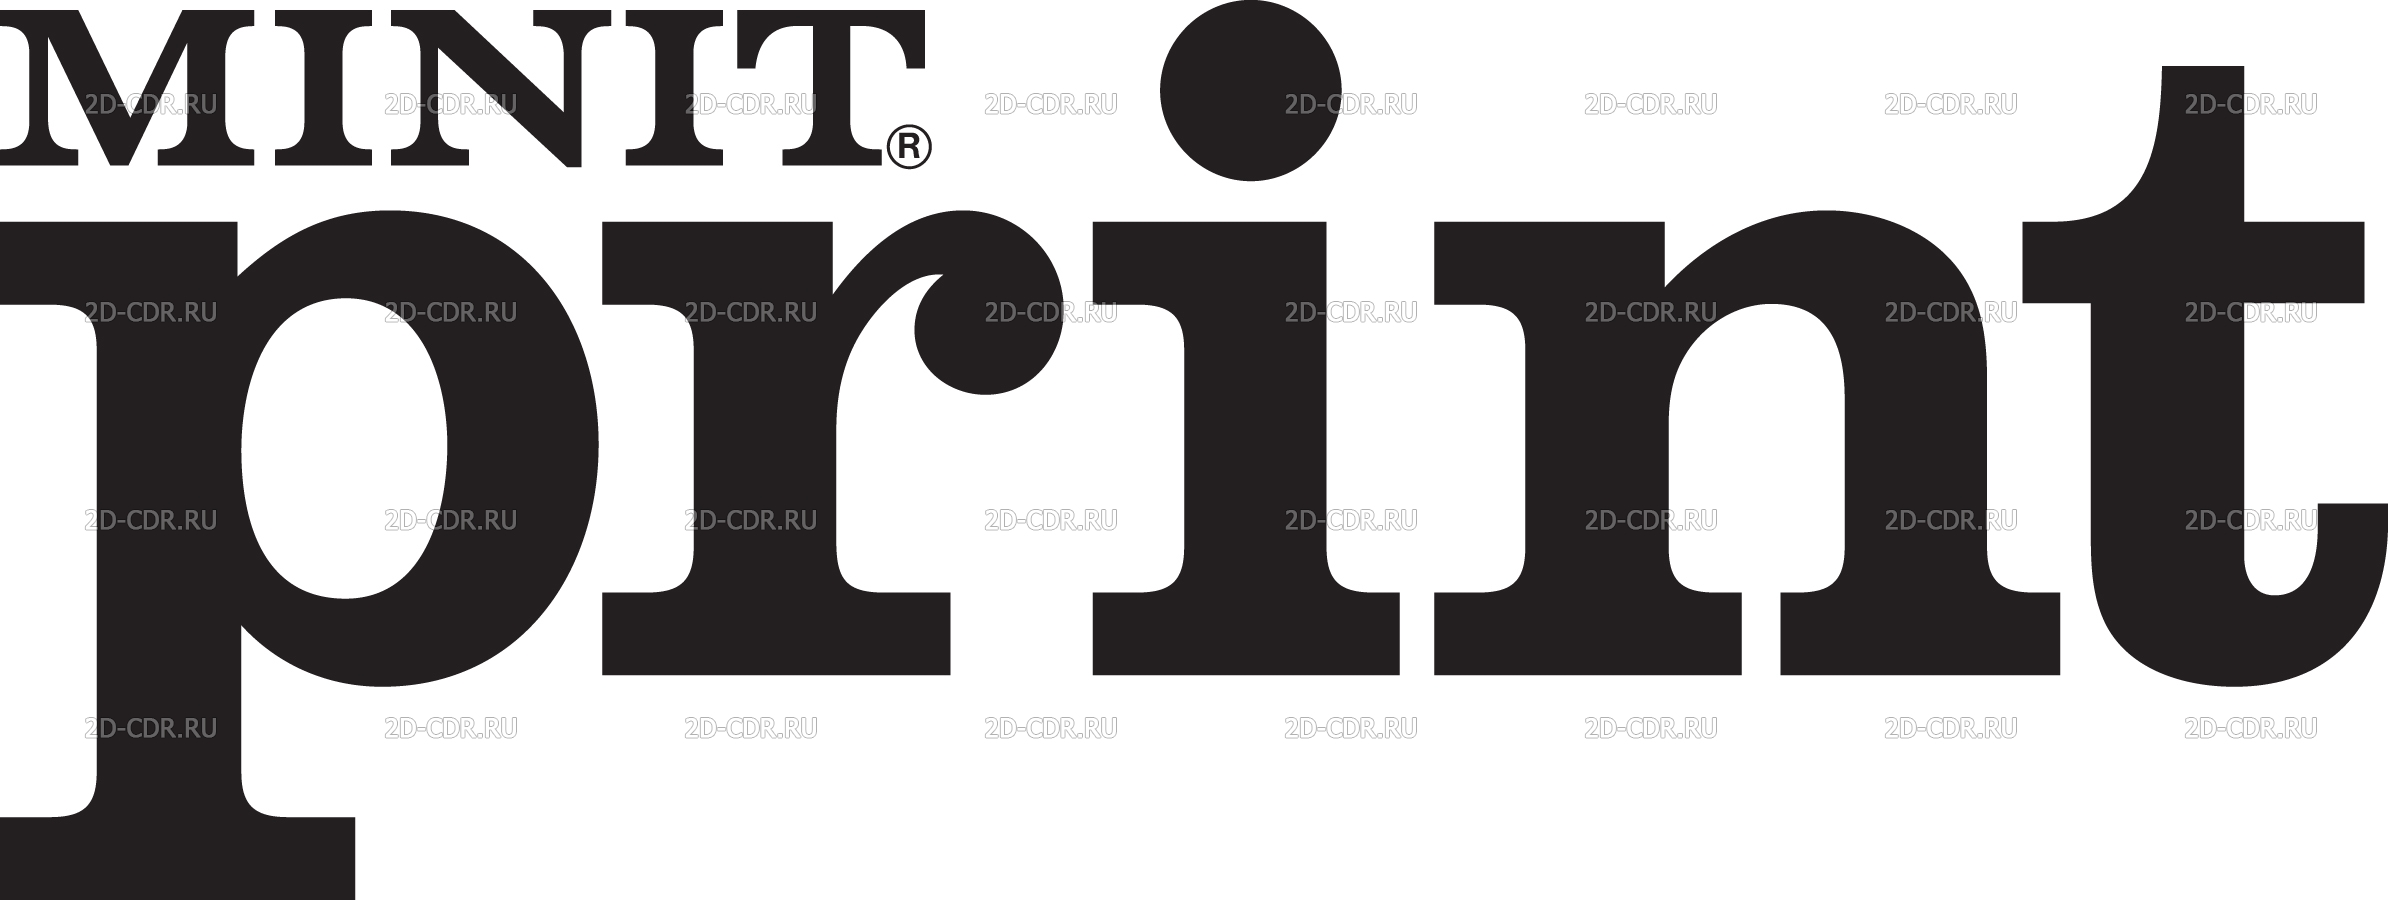 Минит. АСР принт лого. Gazta'minit logo.